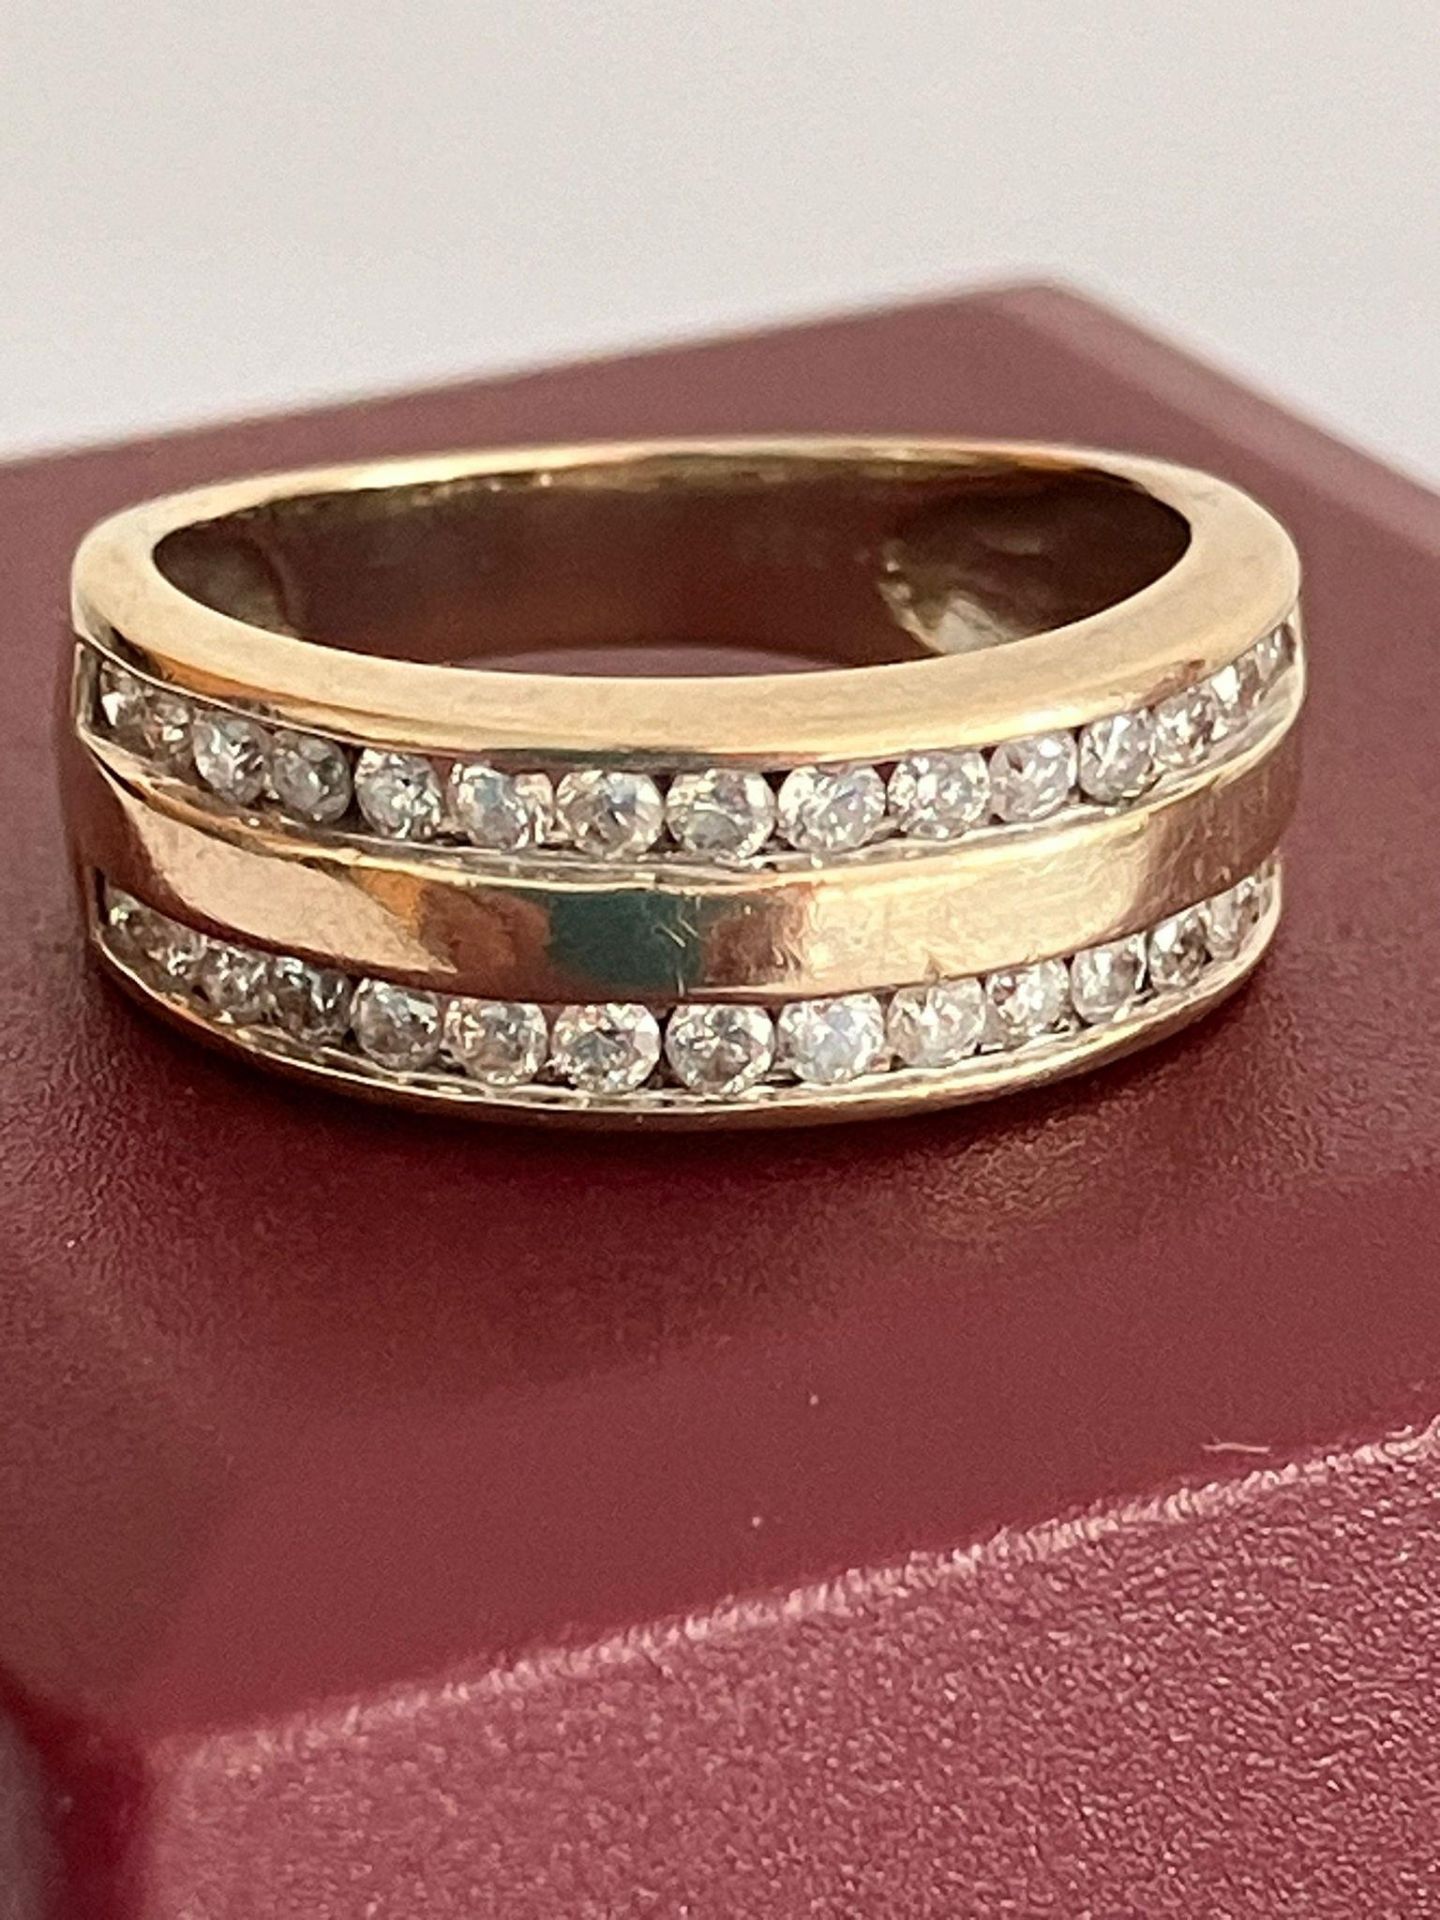 18 carat YELLOW GOLD RING set with 32 DIAMONDS. Full UK hallmark. Presented in jewellers ring box.